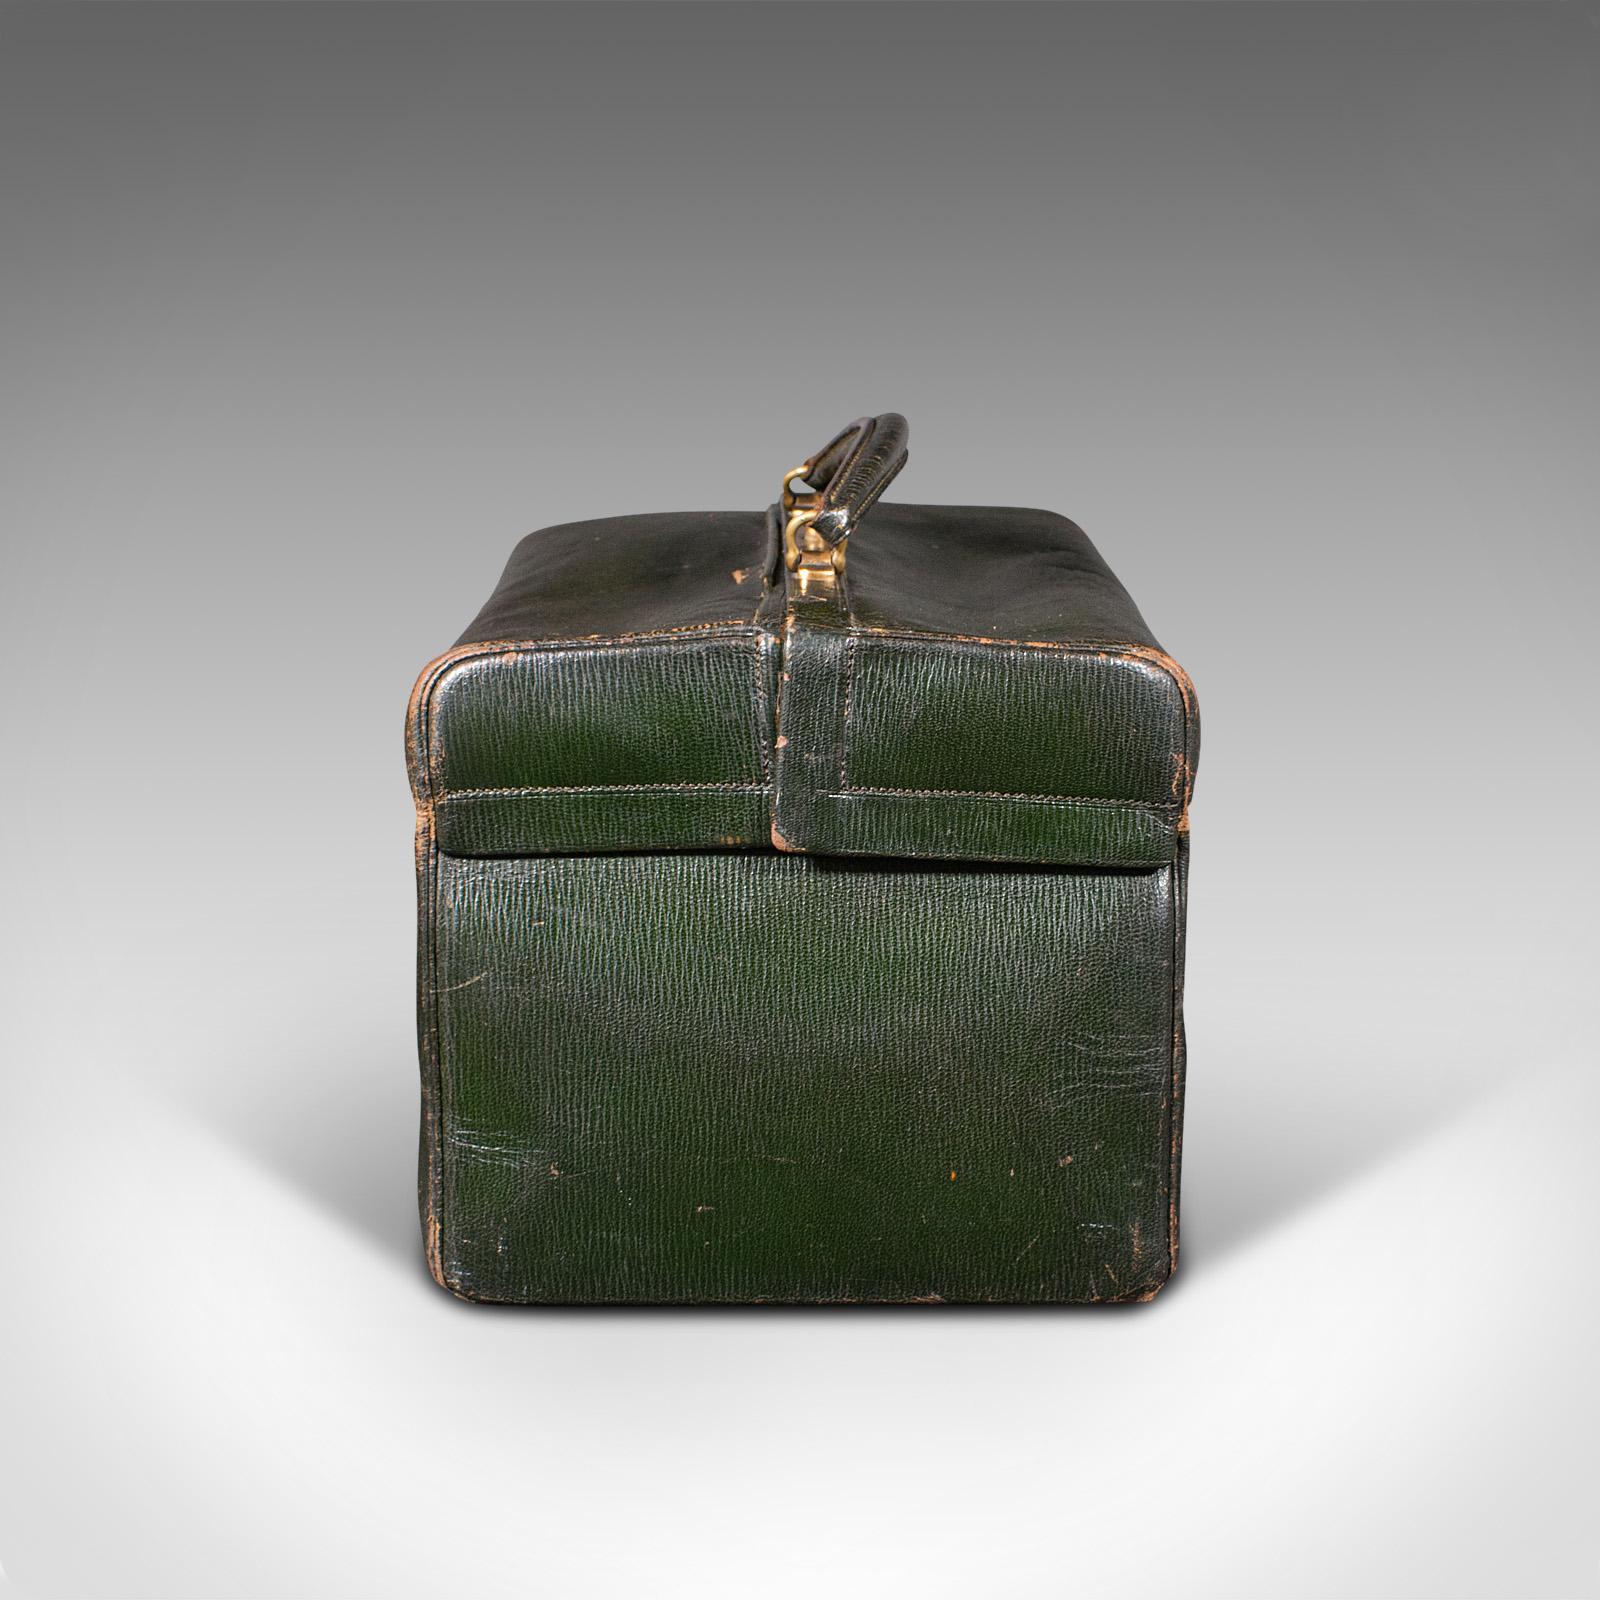 British Antique Toiletry Case, English, Leather, Vanity Bag, Harrods, London, Edwardian